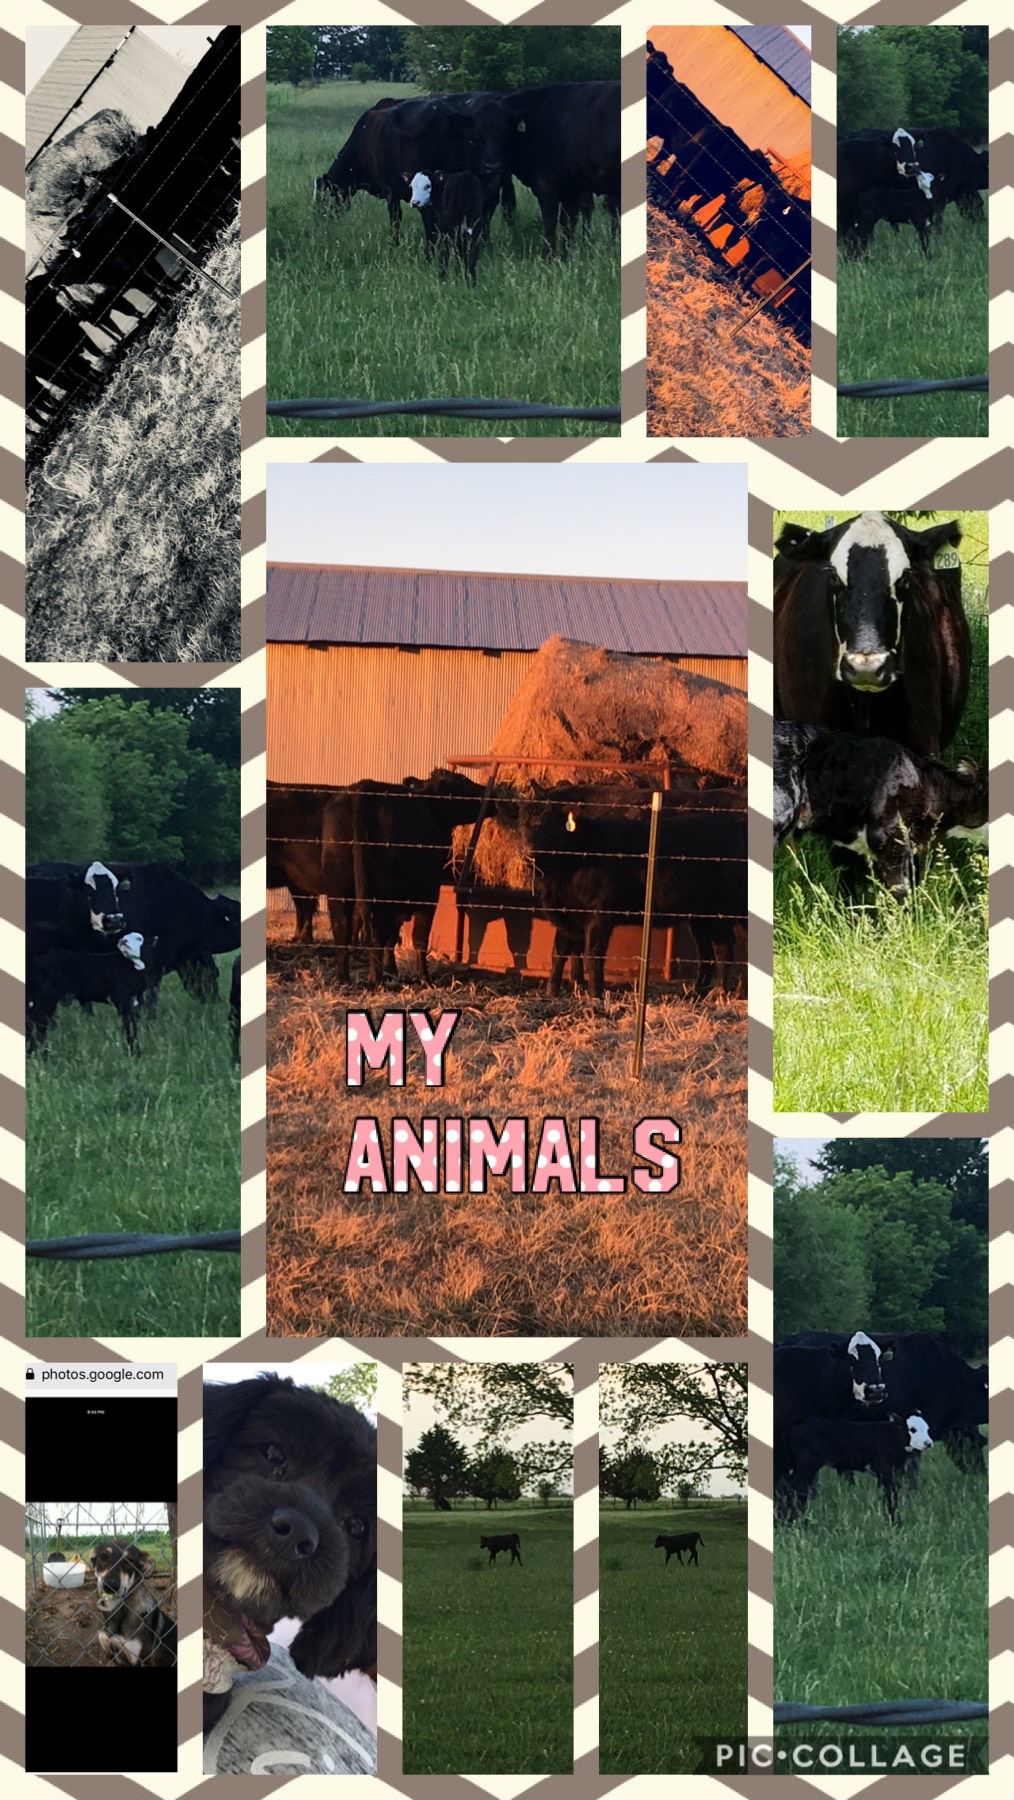 My animals 